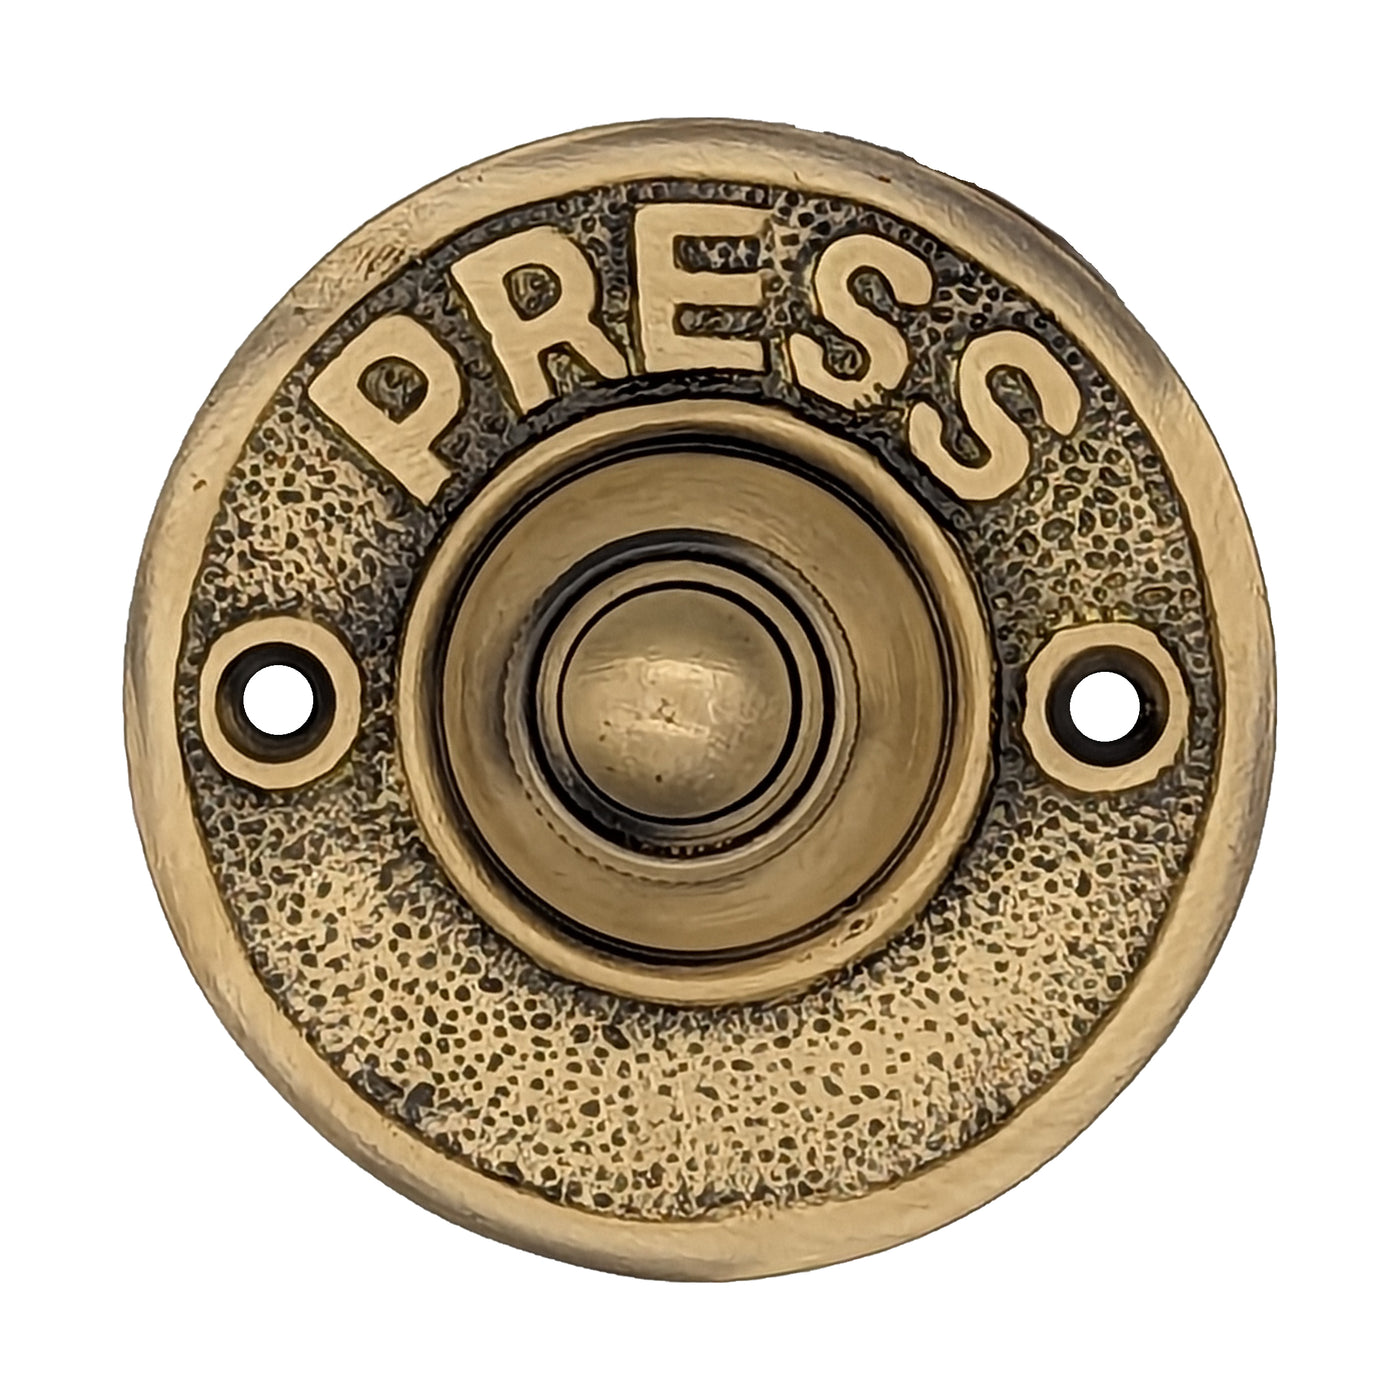 Classic American PRESS Doorbell Push Button (Antique Brass Finish)